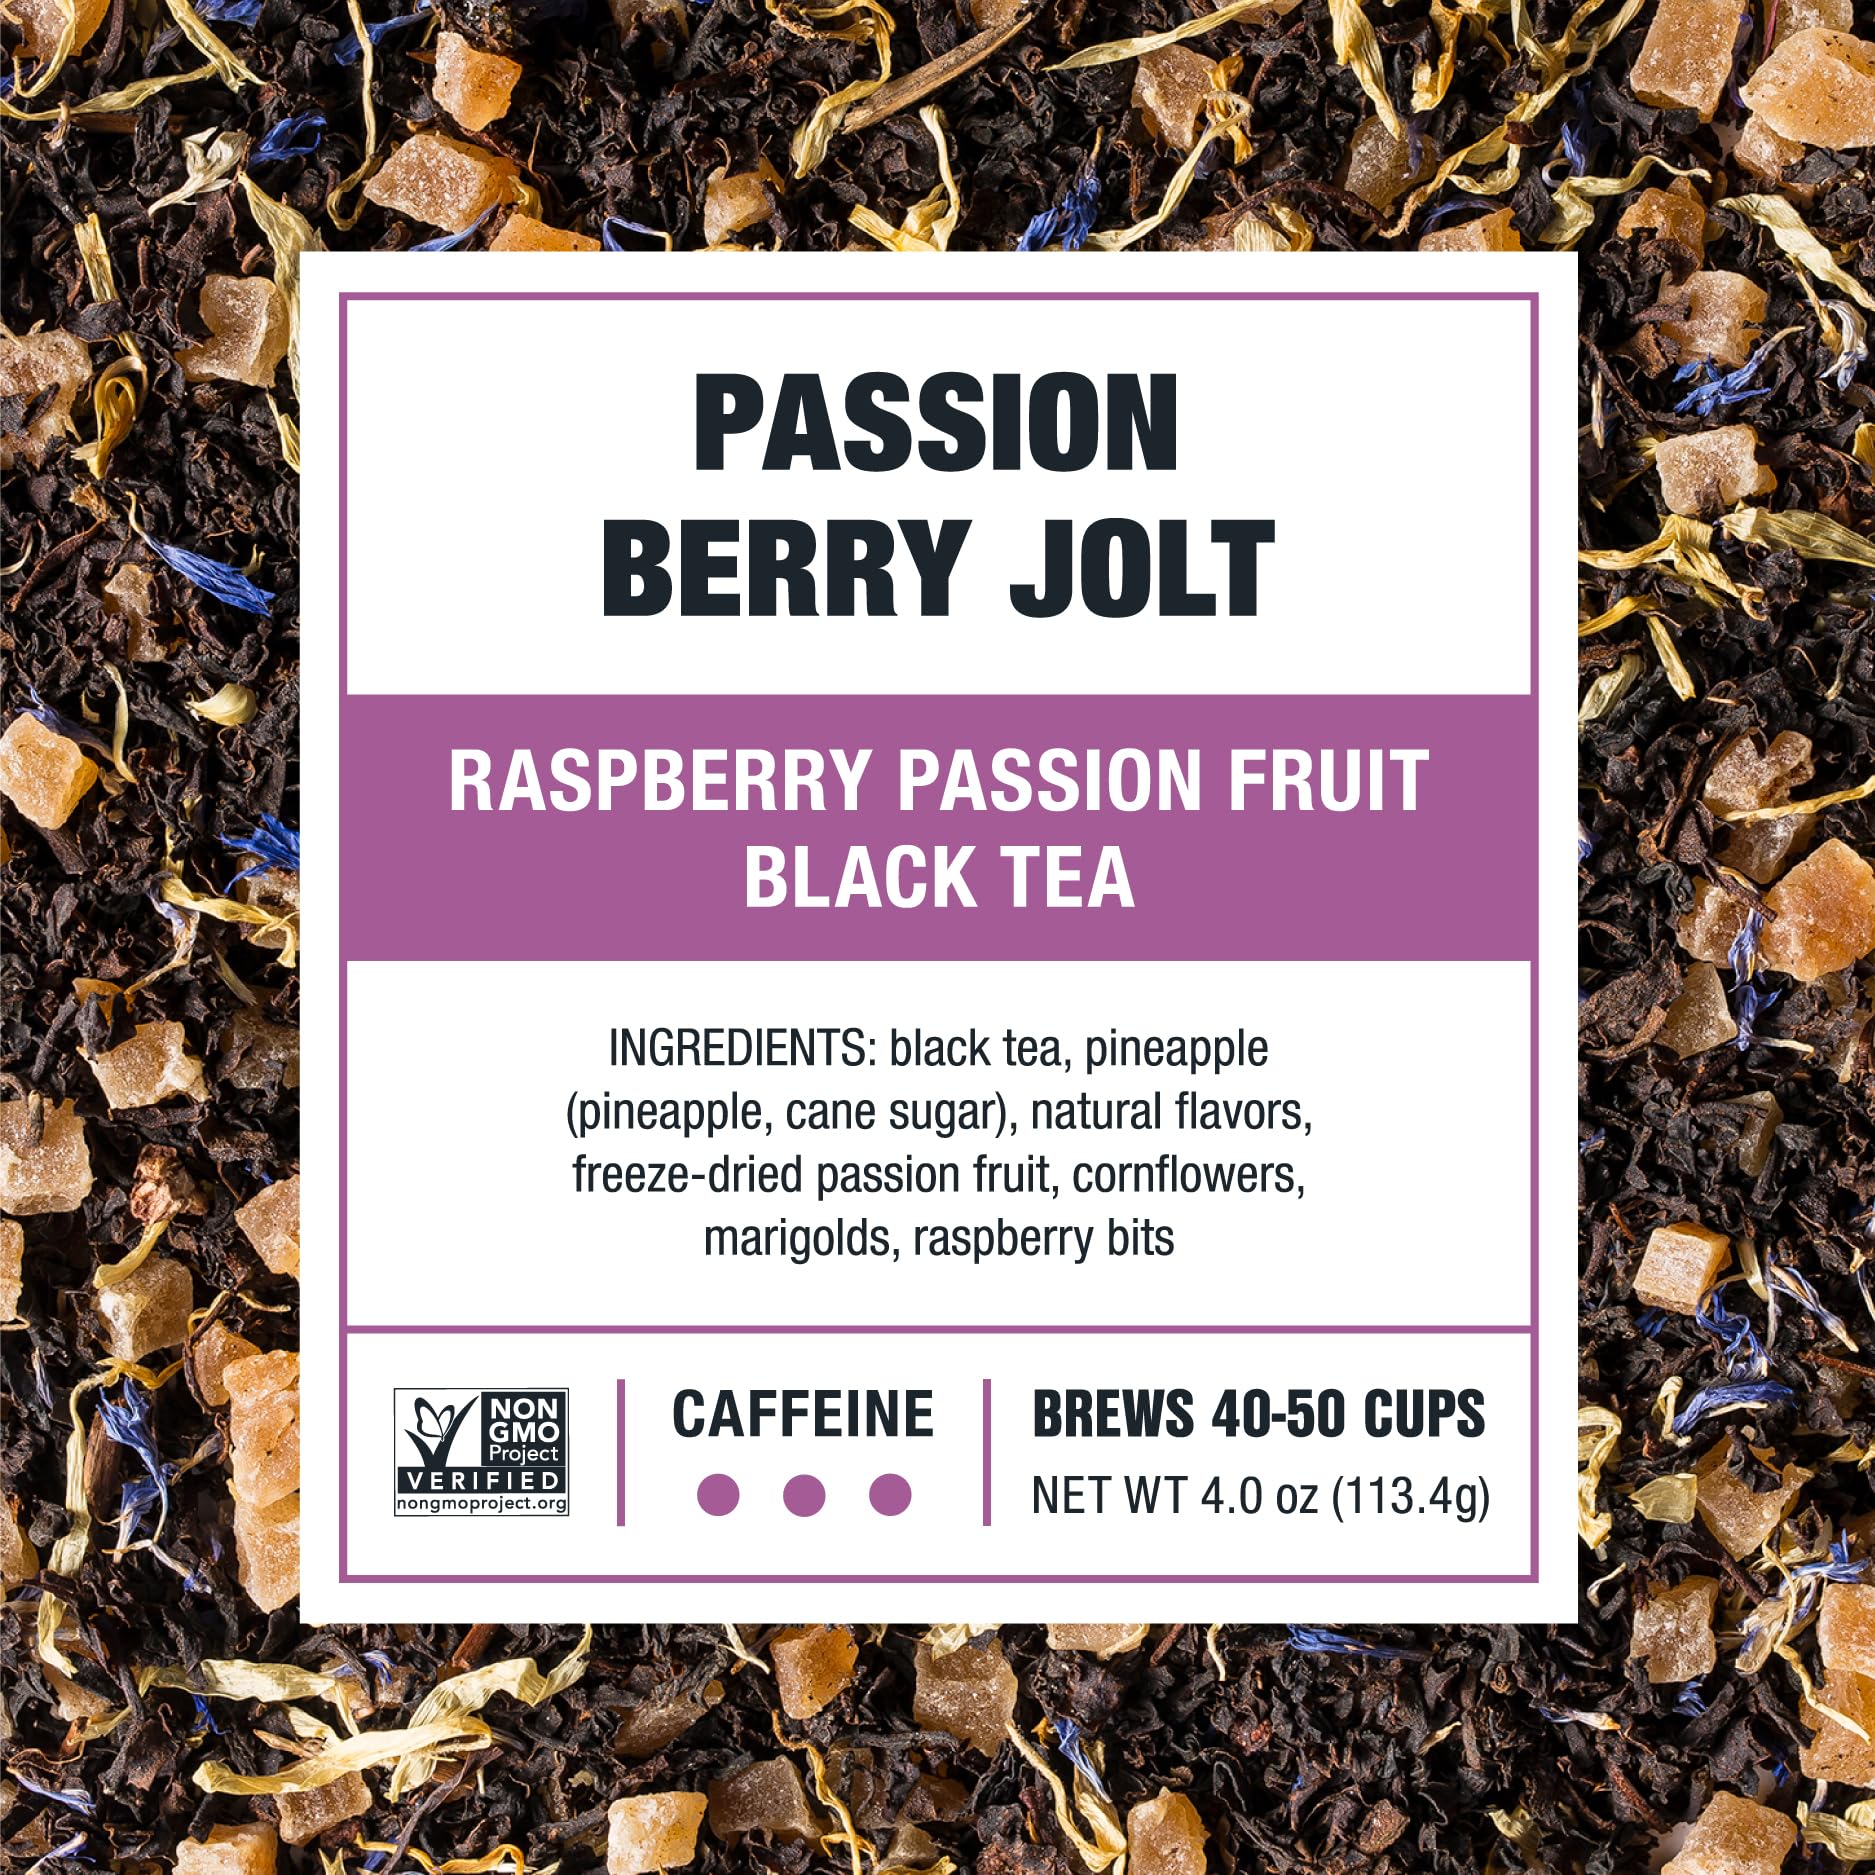 Tiesta Tea - Passion Berry Jolt, Raspberry Passion Fruit Black Tea, Premium Loose Leaf Tea Blends, Caffeinated Black Tea, Make Hot or Iced Tea & Brews Up to 50 Cups - 4 Ounce Refillable Tin